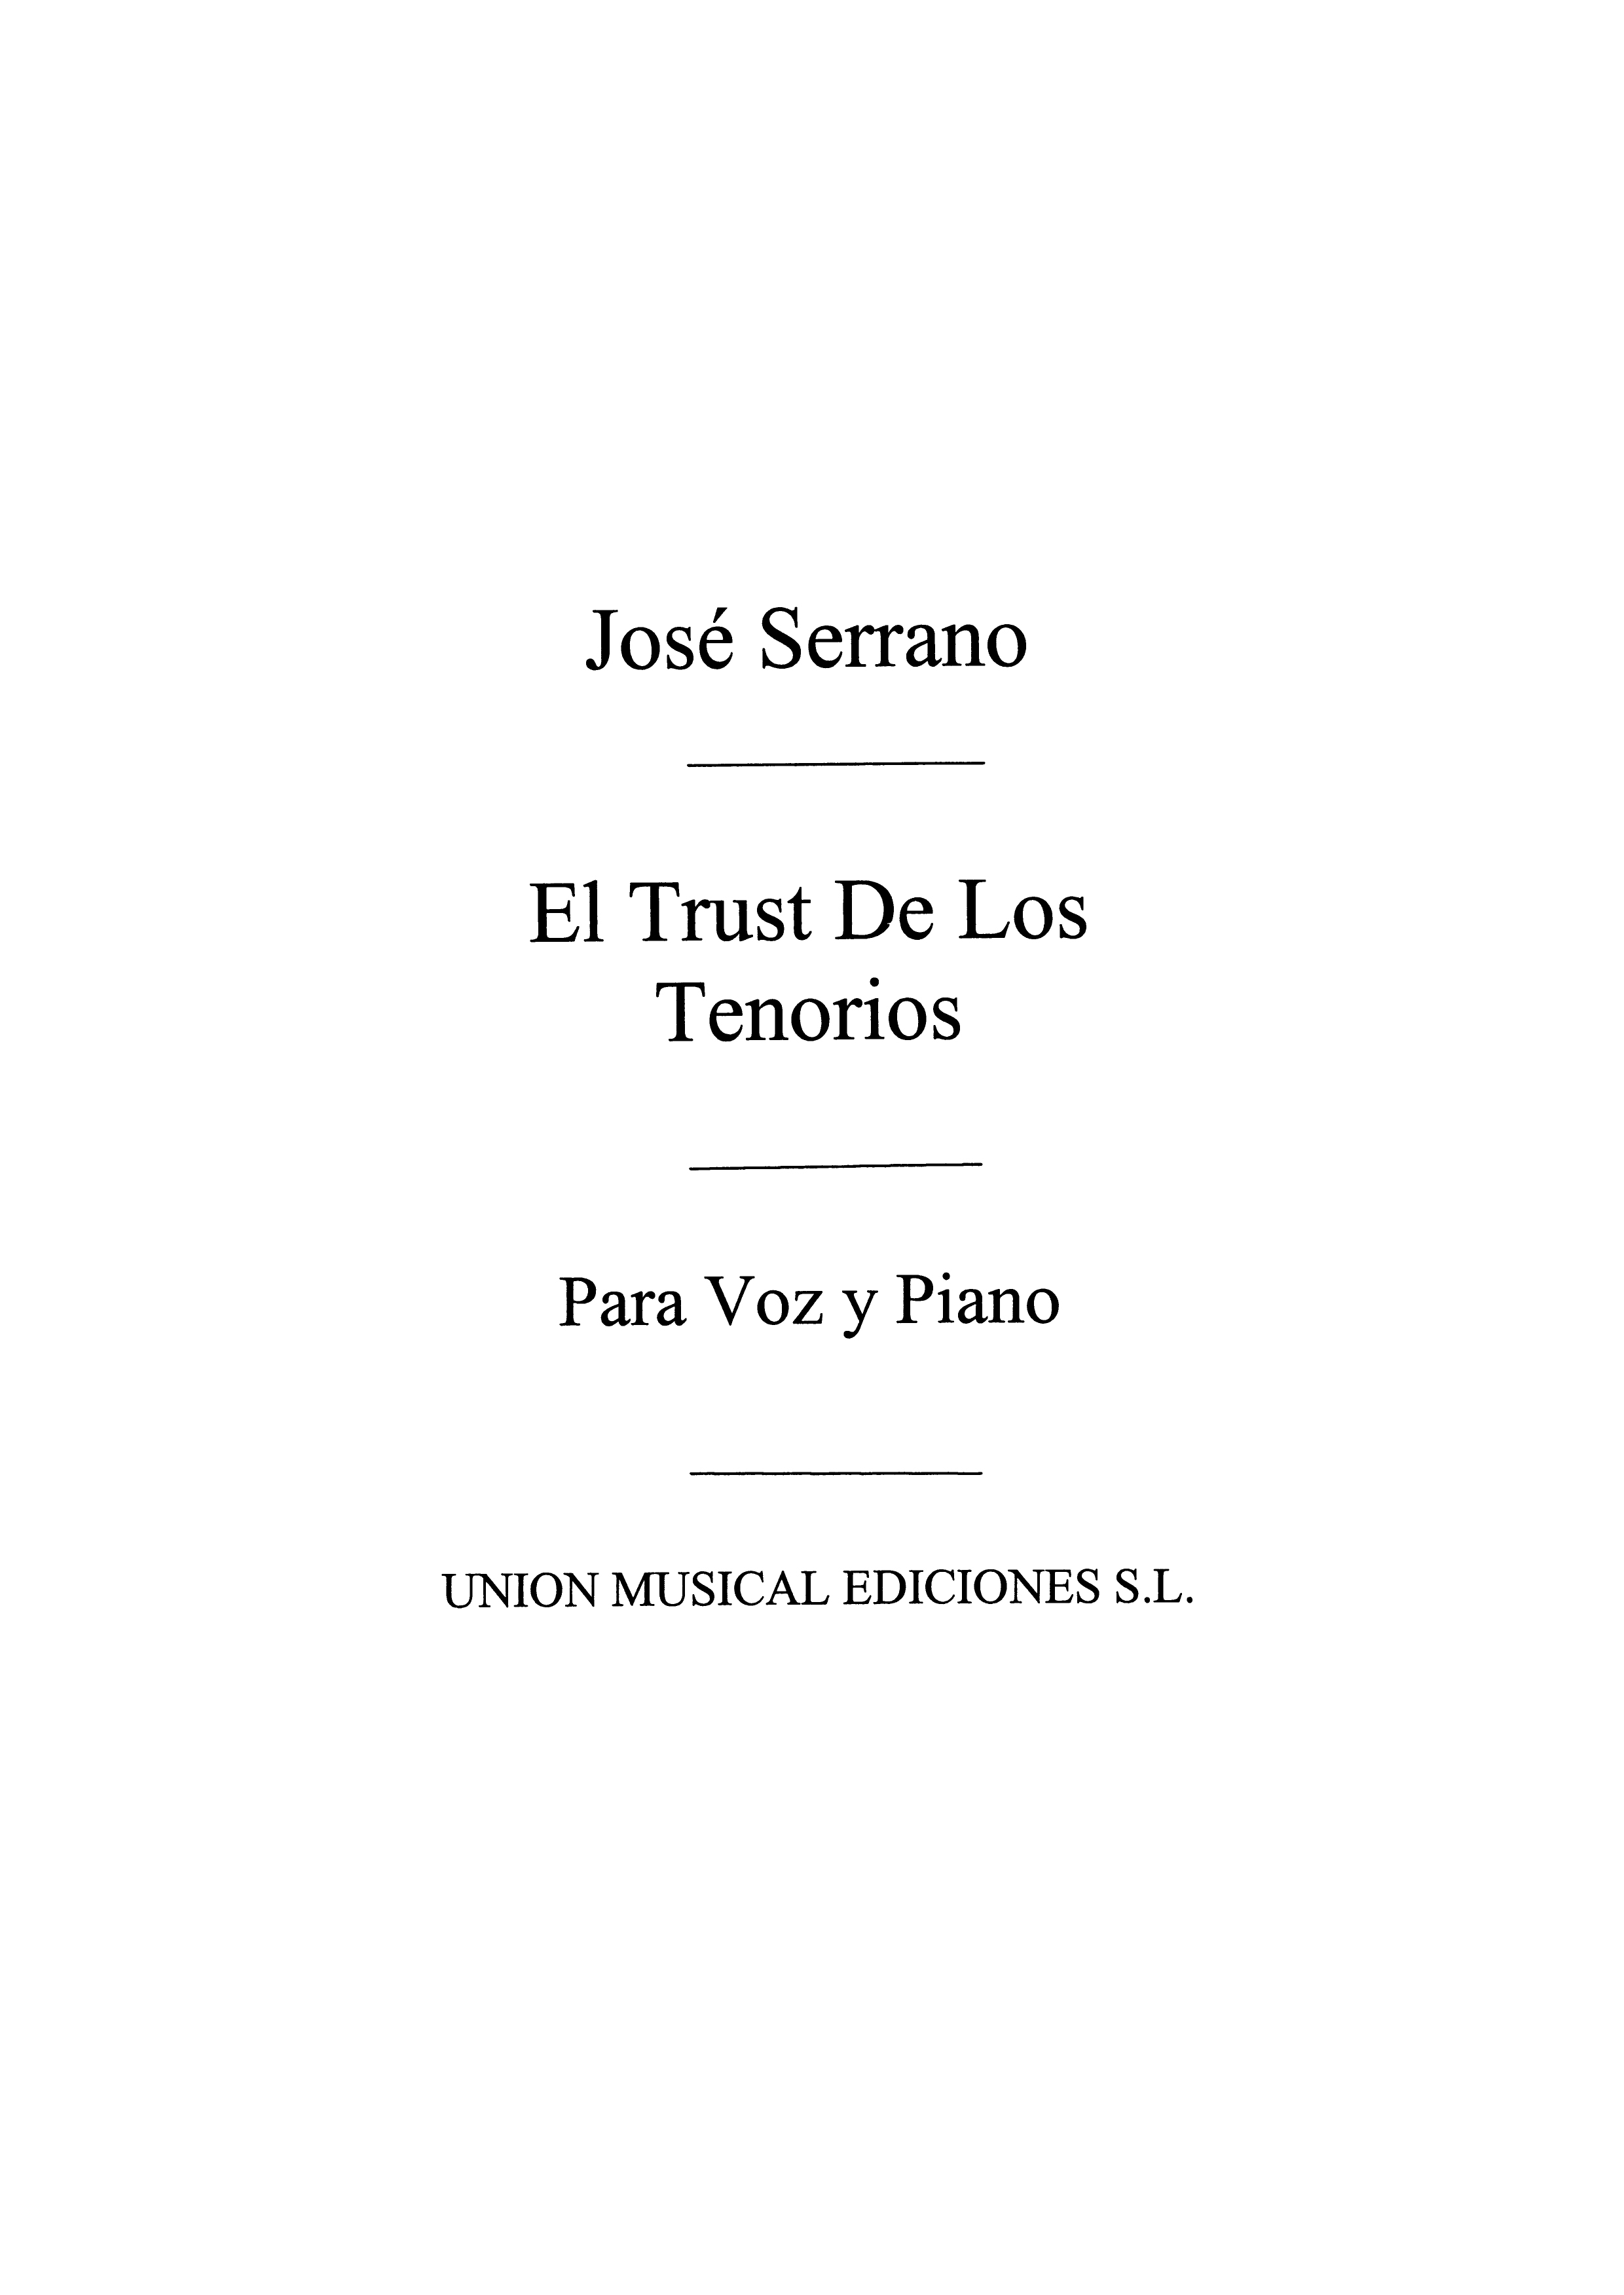 Jose Serrano: Jota de El Trust De Los Tenorios: Opera: Instrumental Work